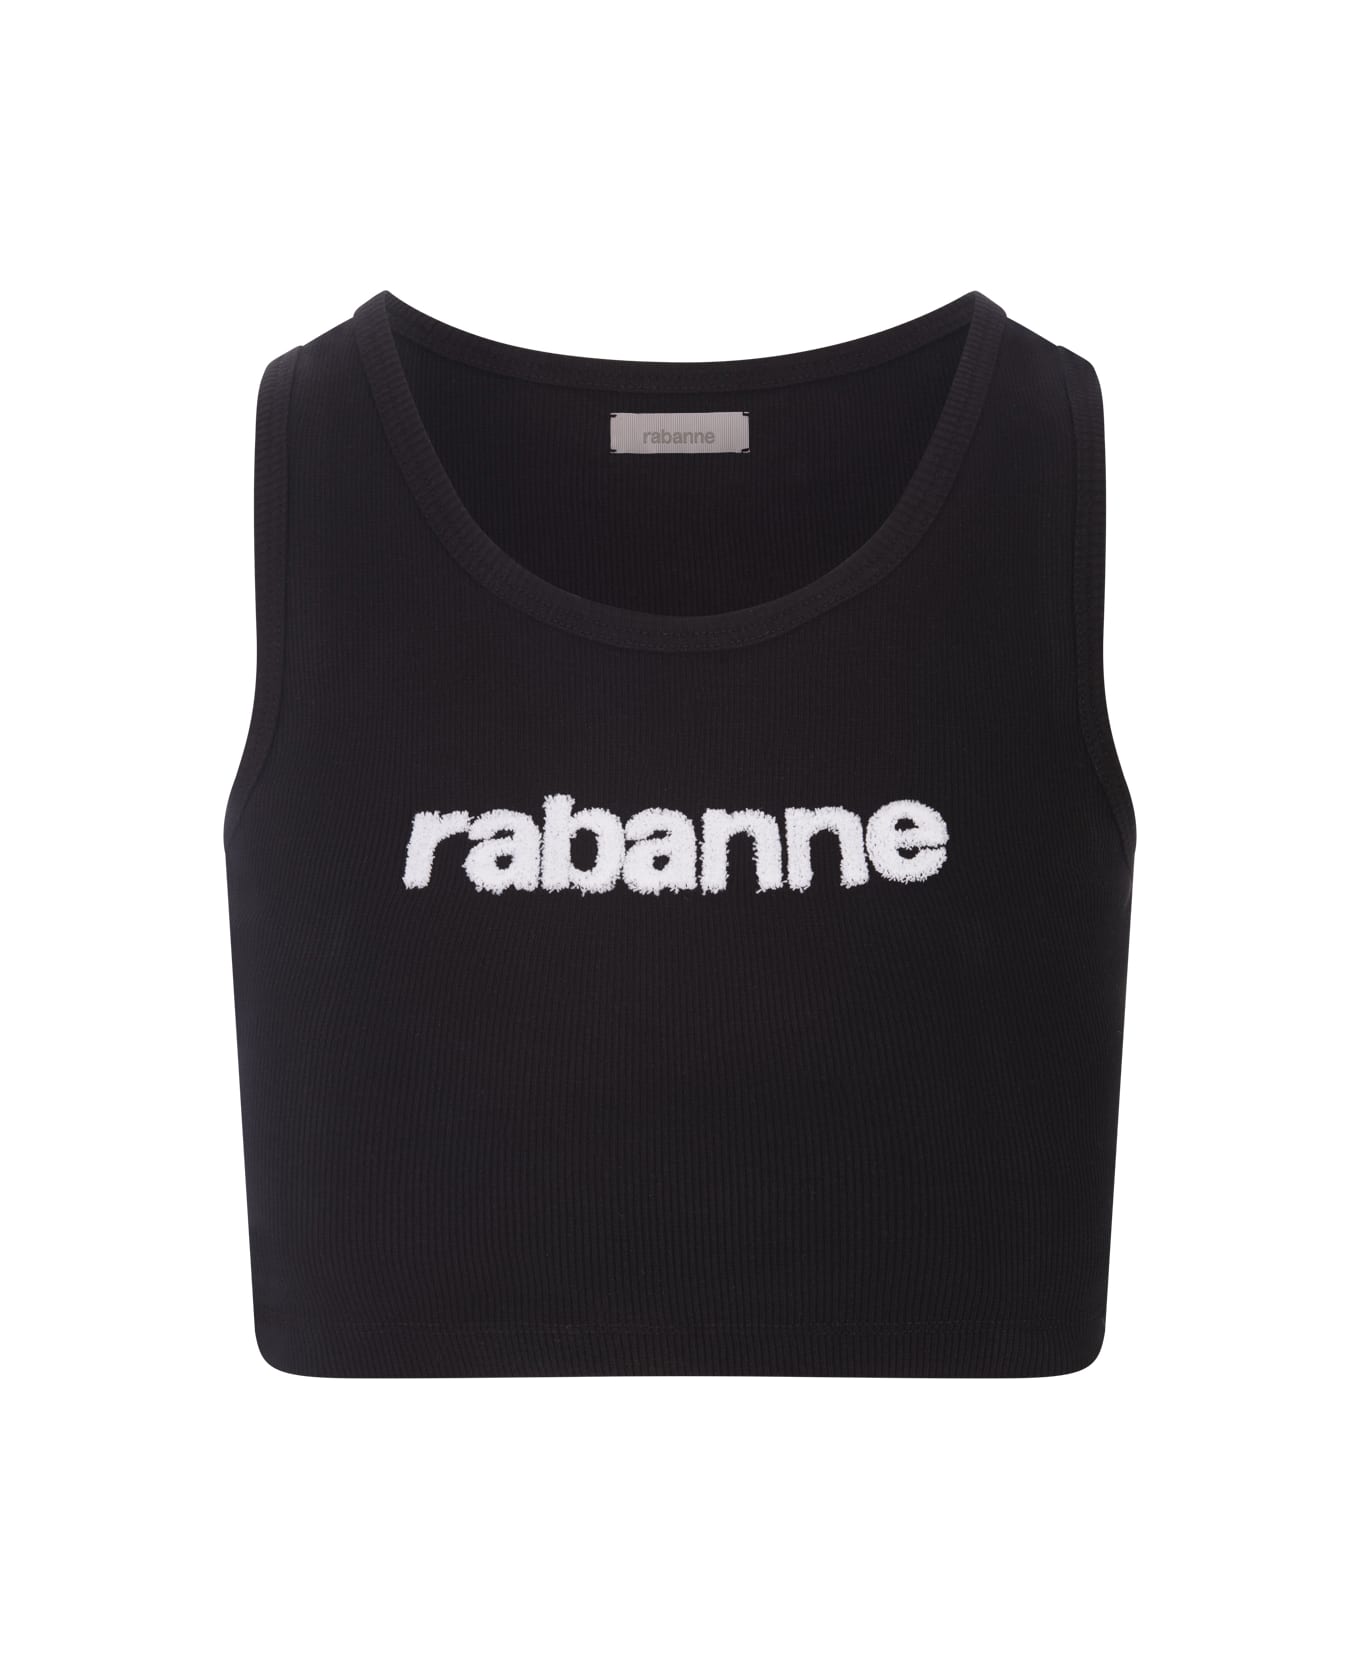 Paco Rabanne Black Crop Top With White Logo - Black